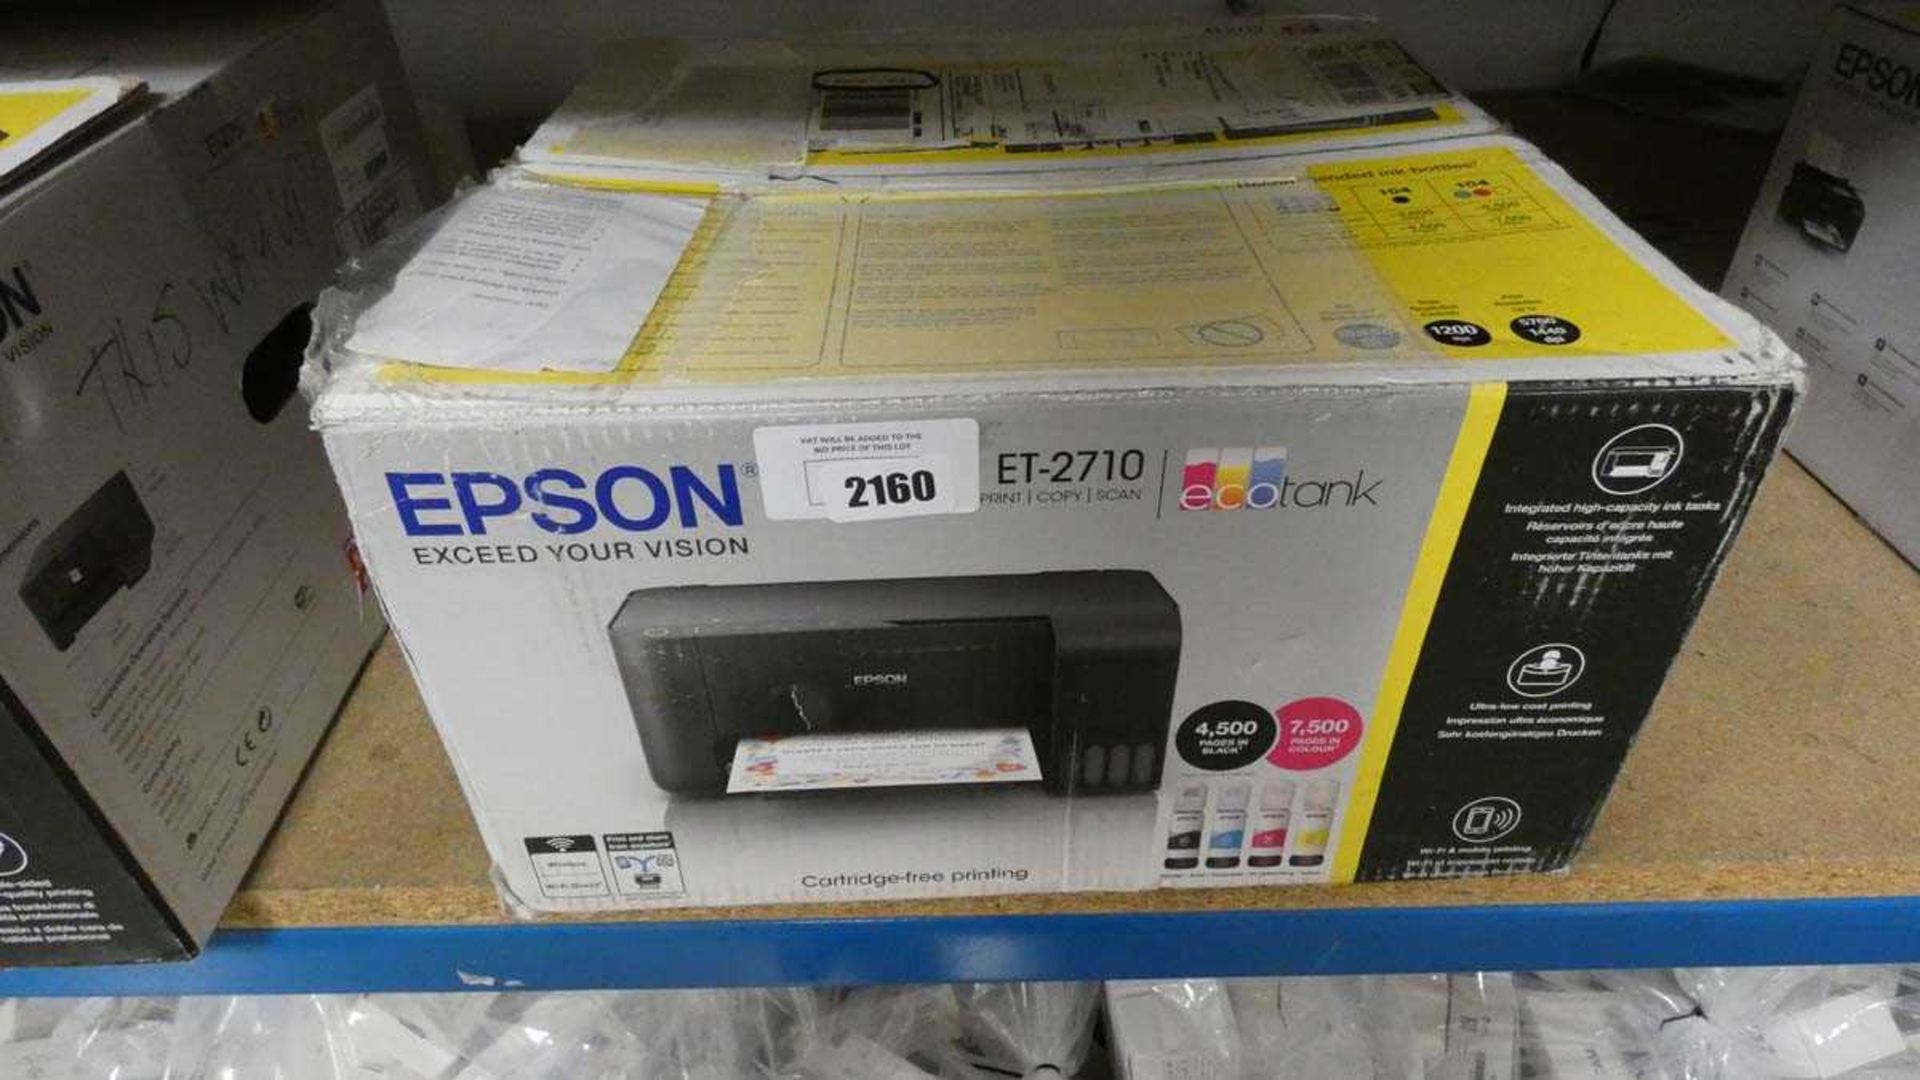 +VAT Epson ET2710 printer with box